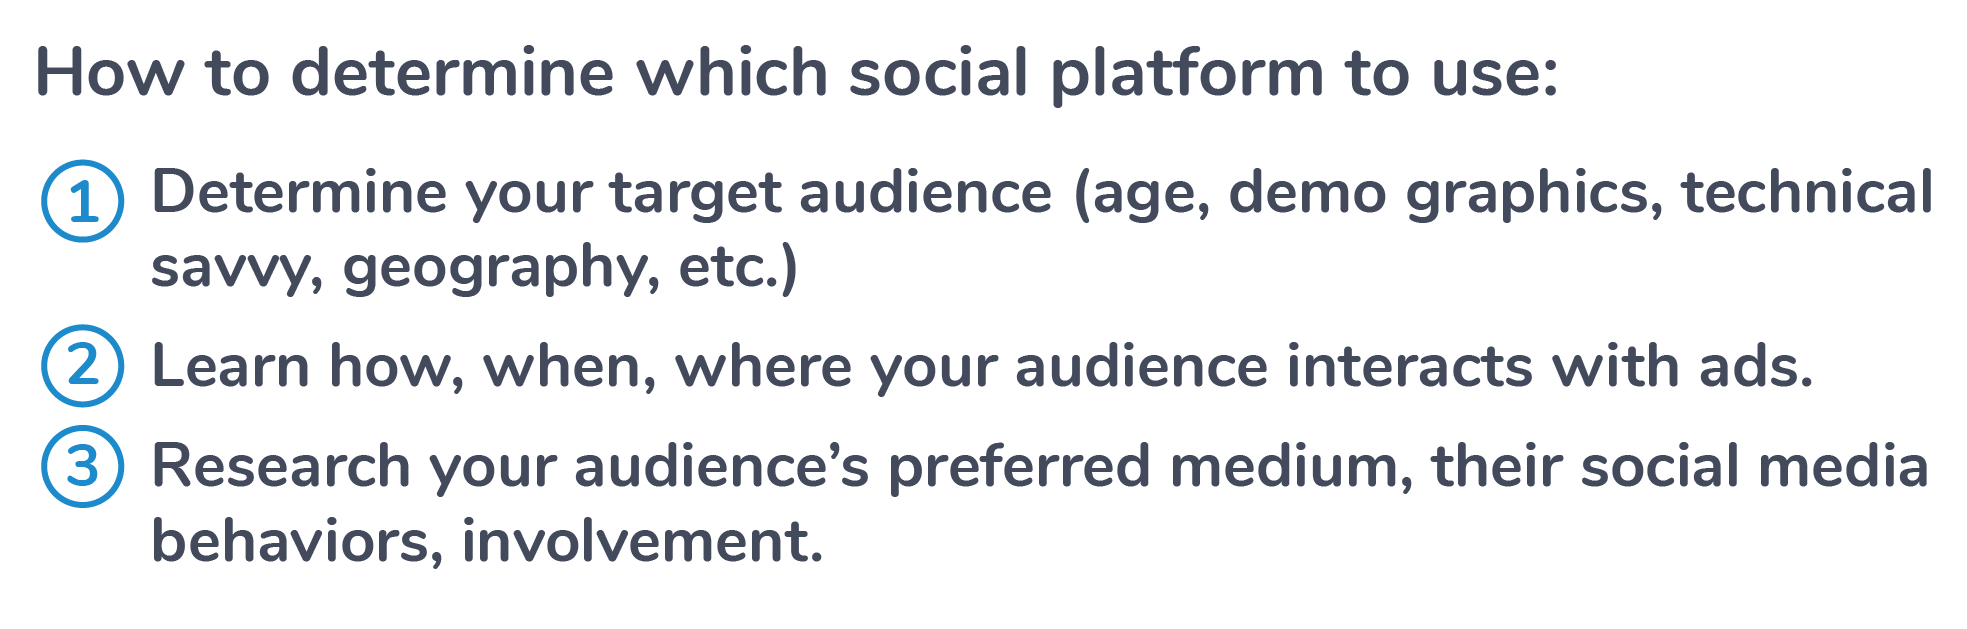 best social platform for content marketing